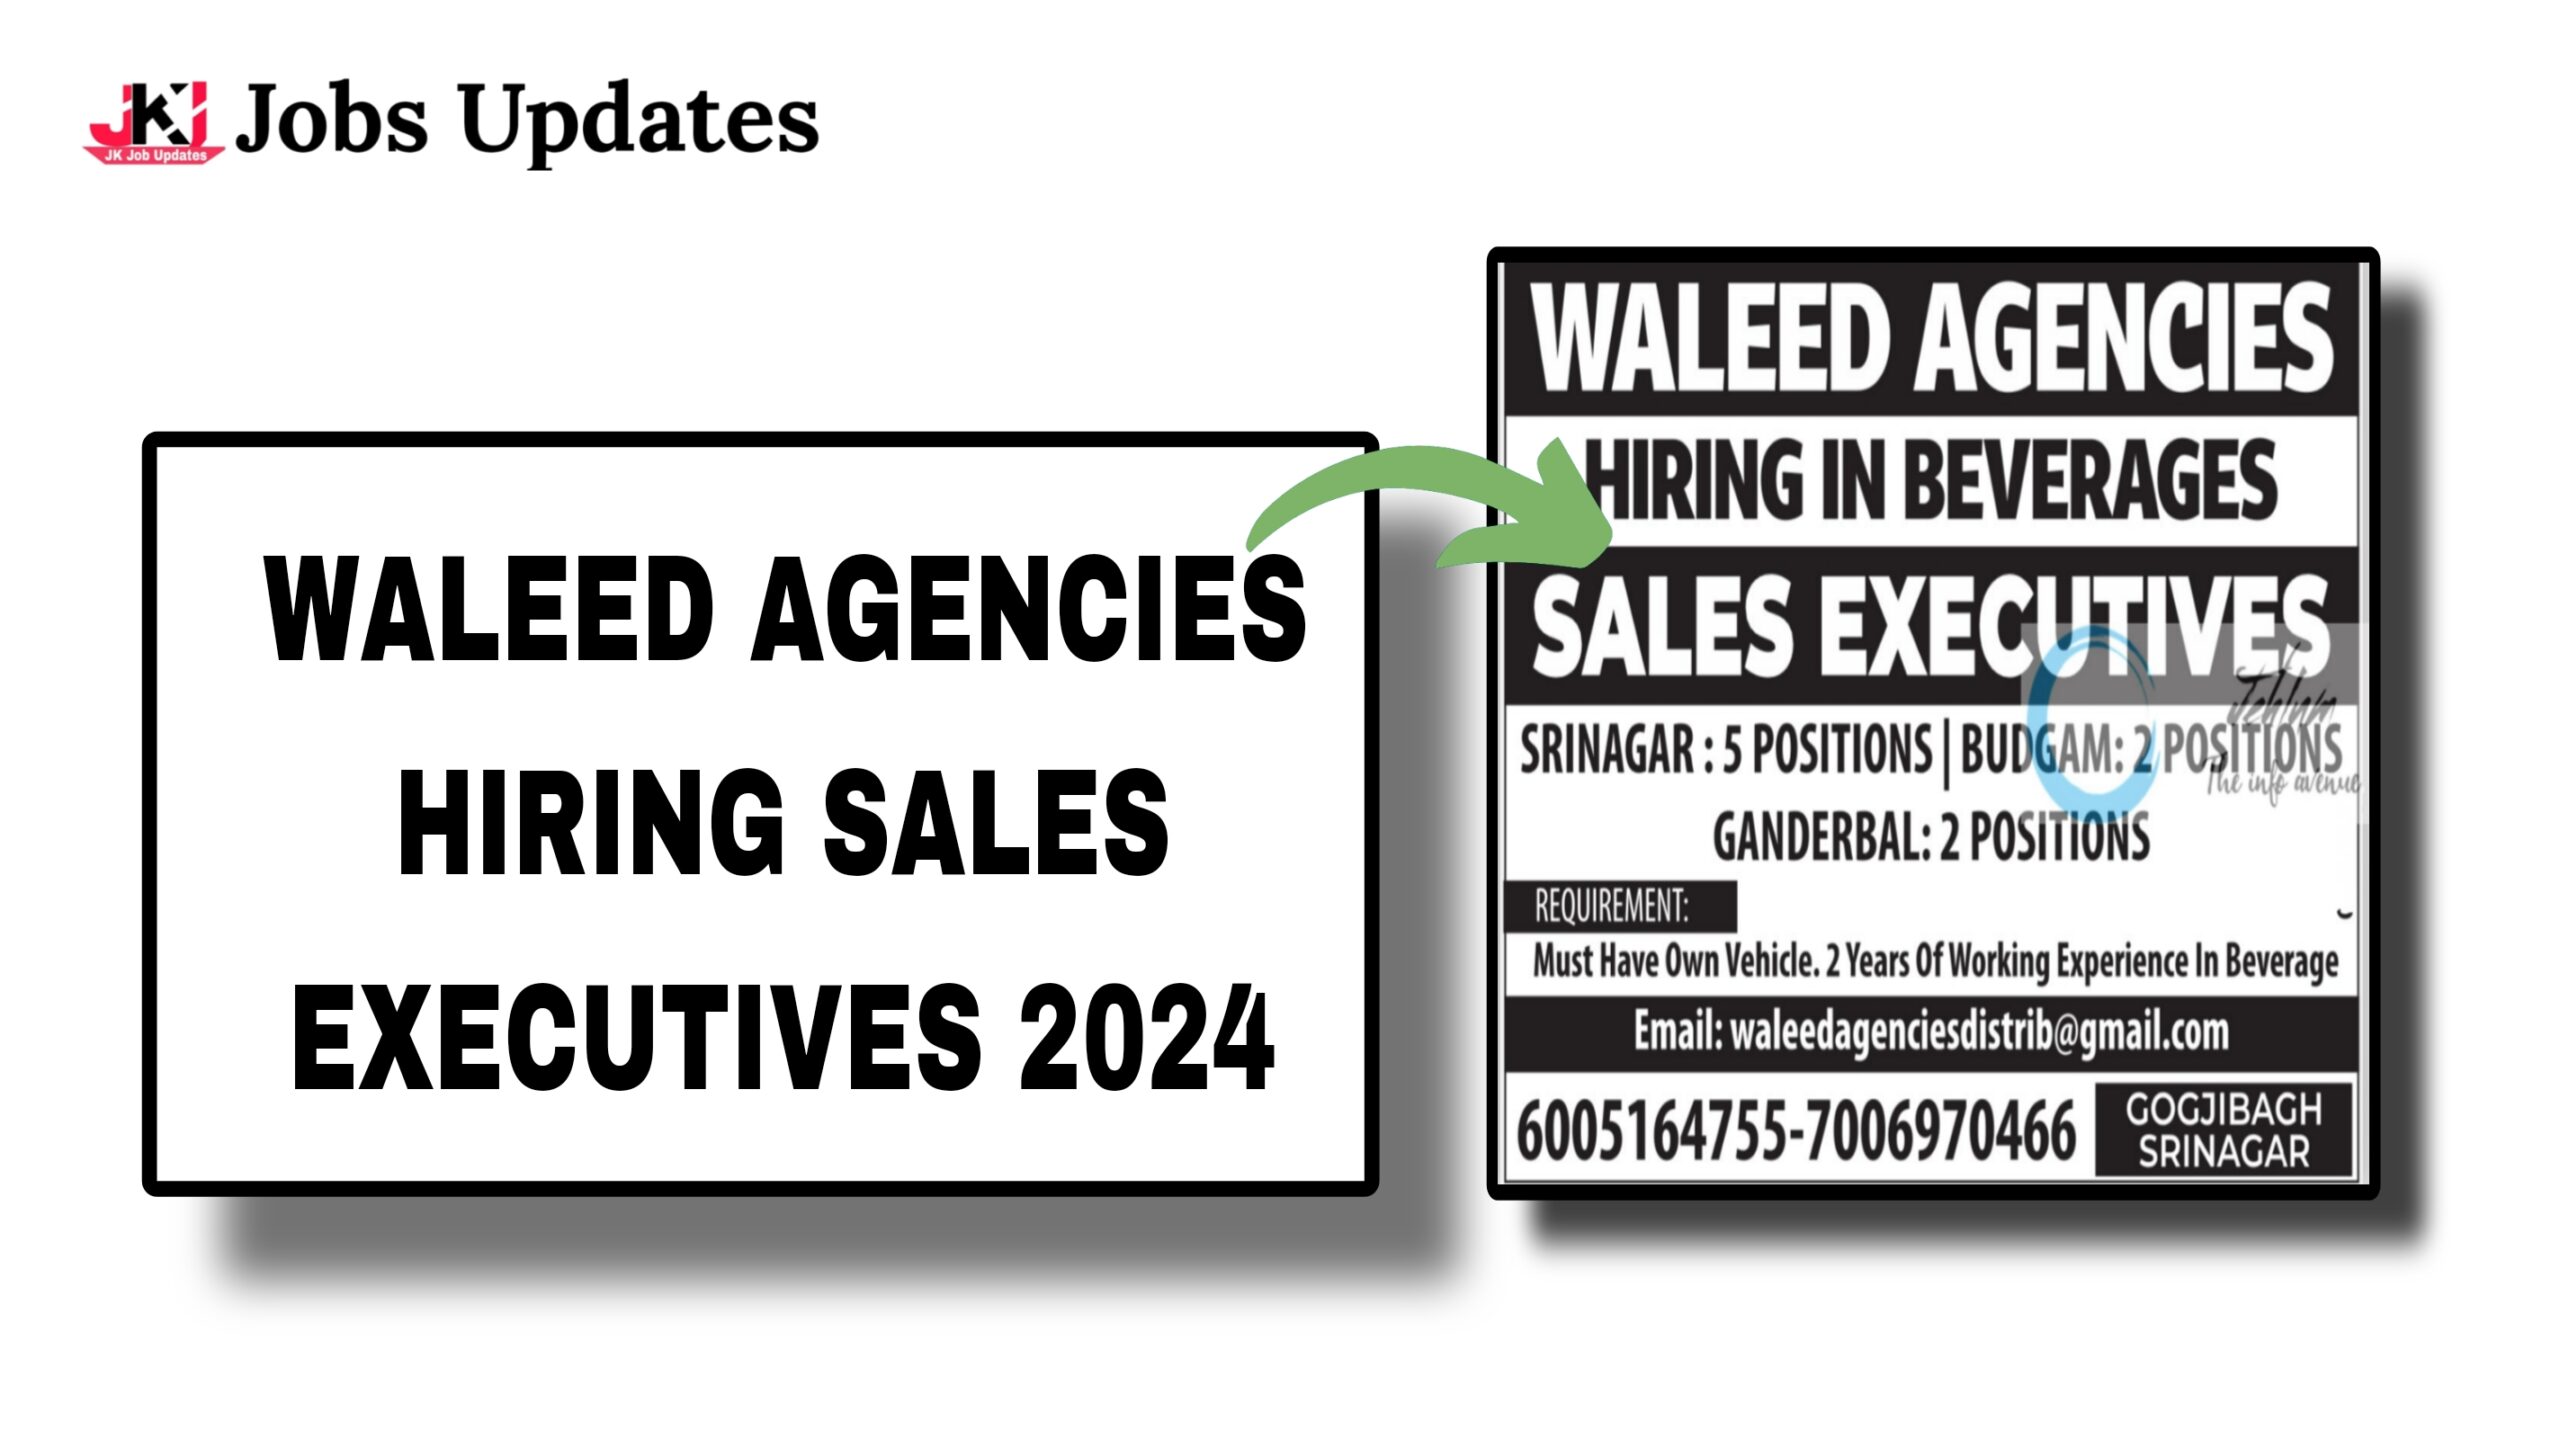 waleed agencies hiring sales executives 2024